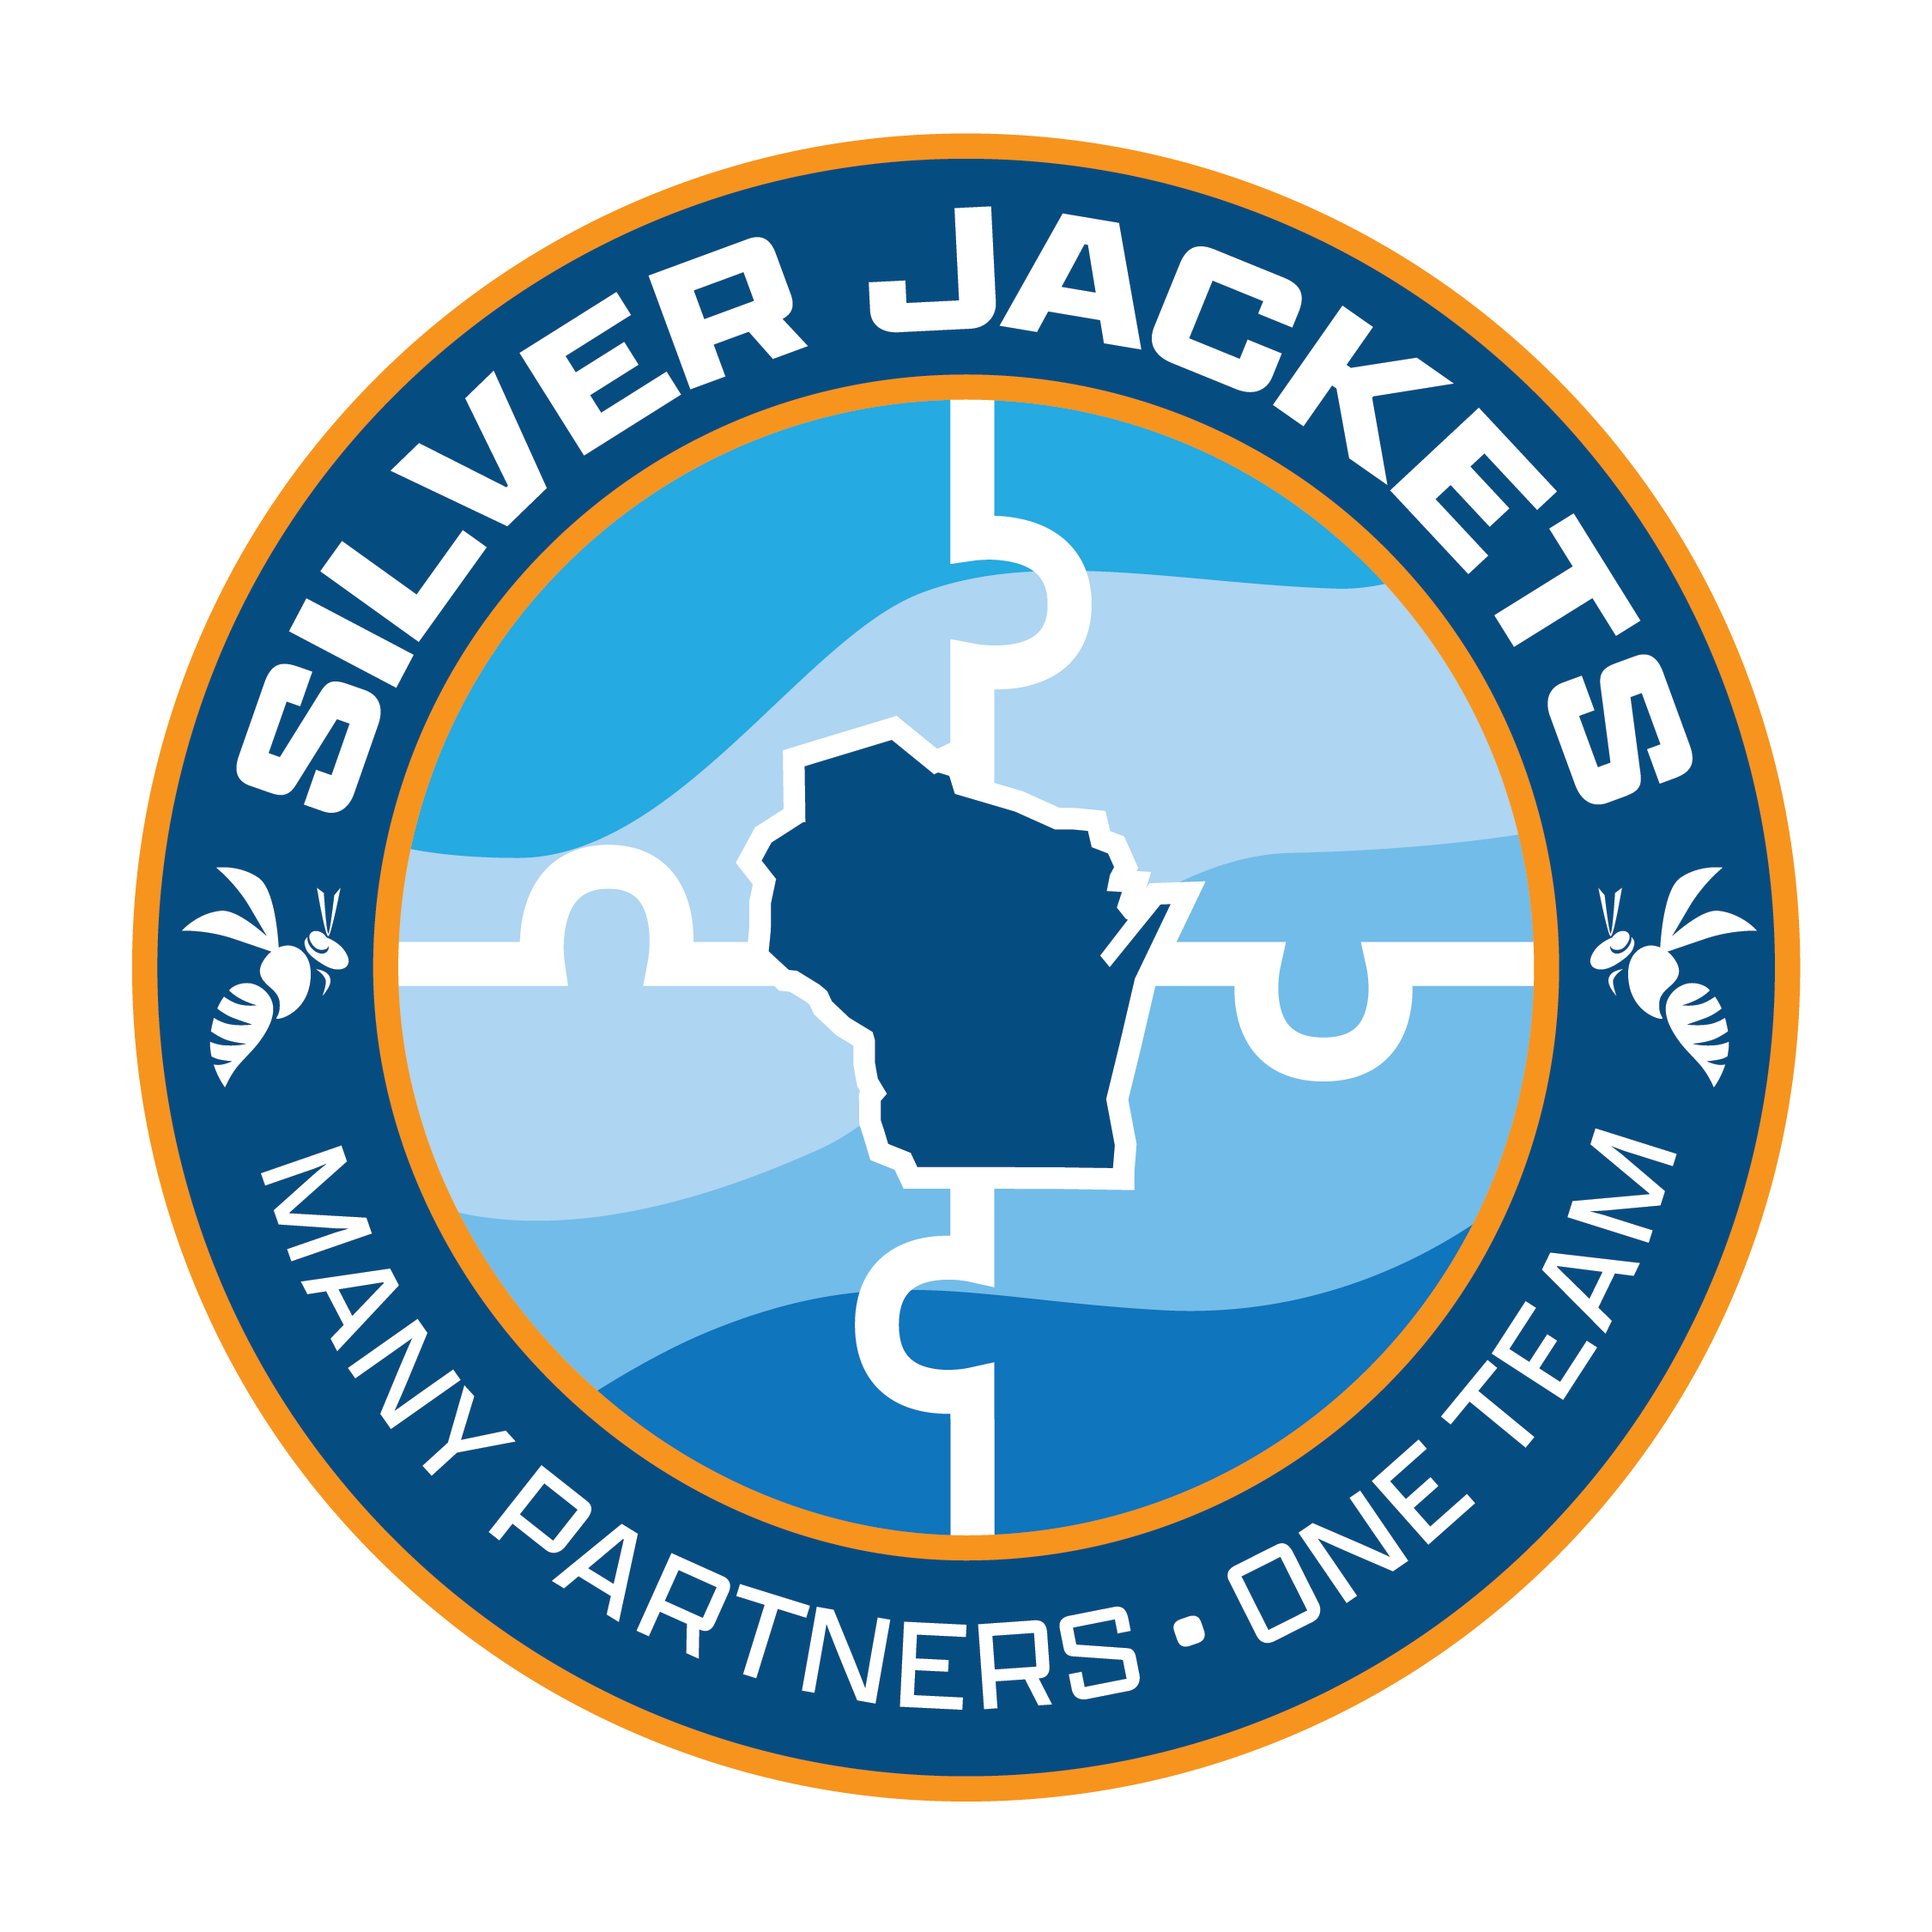 Wisconsin Silver Jackets logo